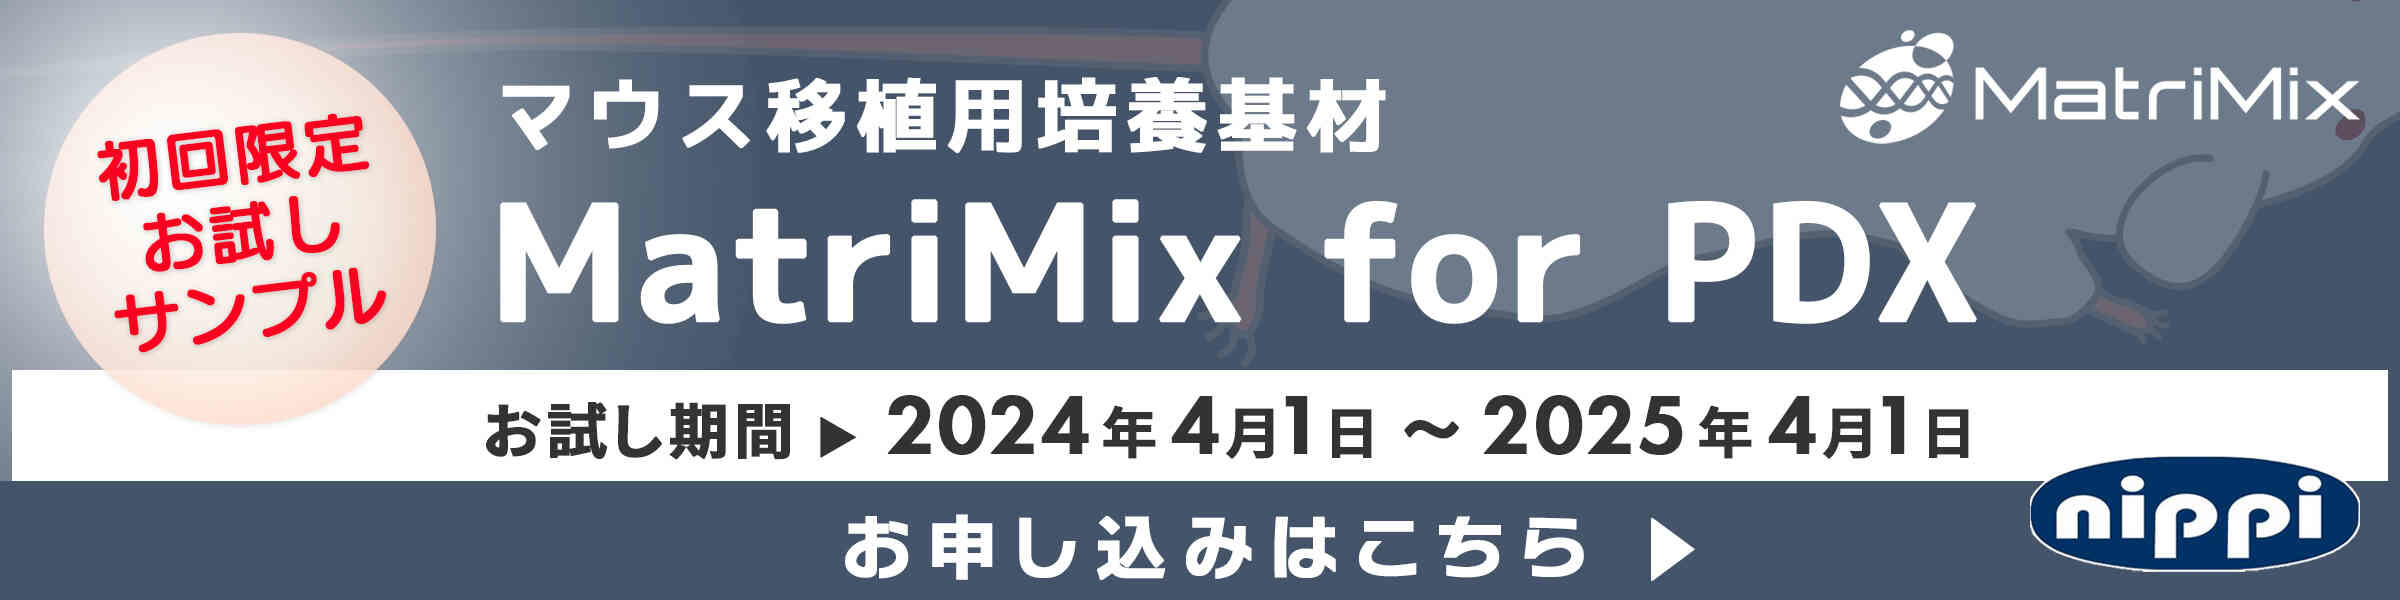 MatriMix for PDX 初回限定お試しサンプル申込みはこちら